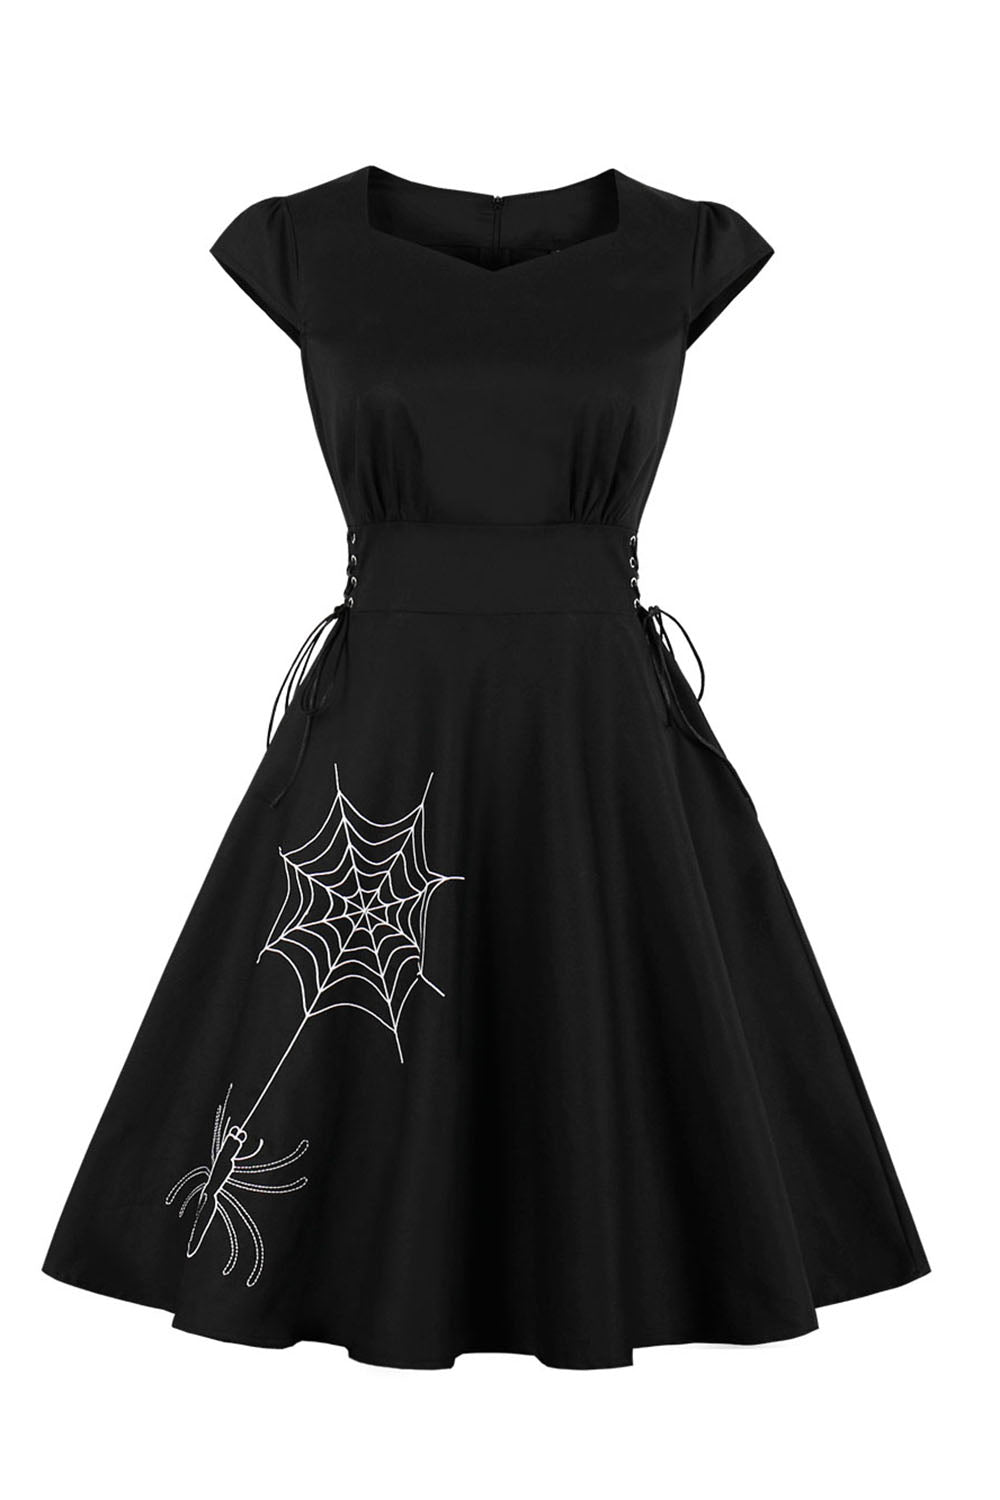 Black Lace-up Vintage Halloween Dress